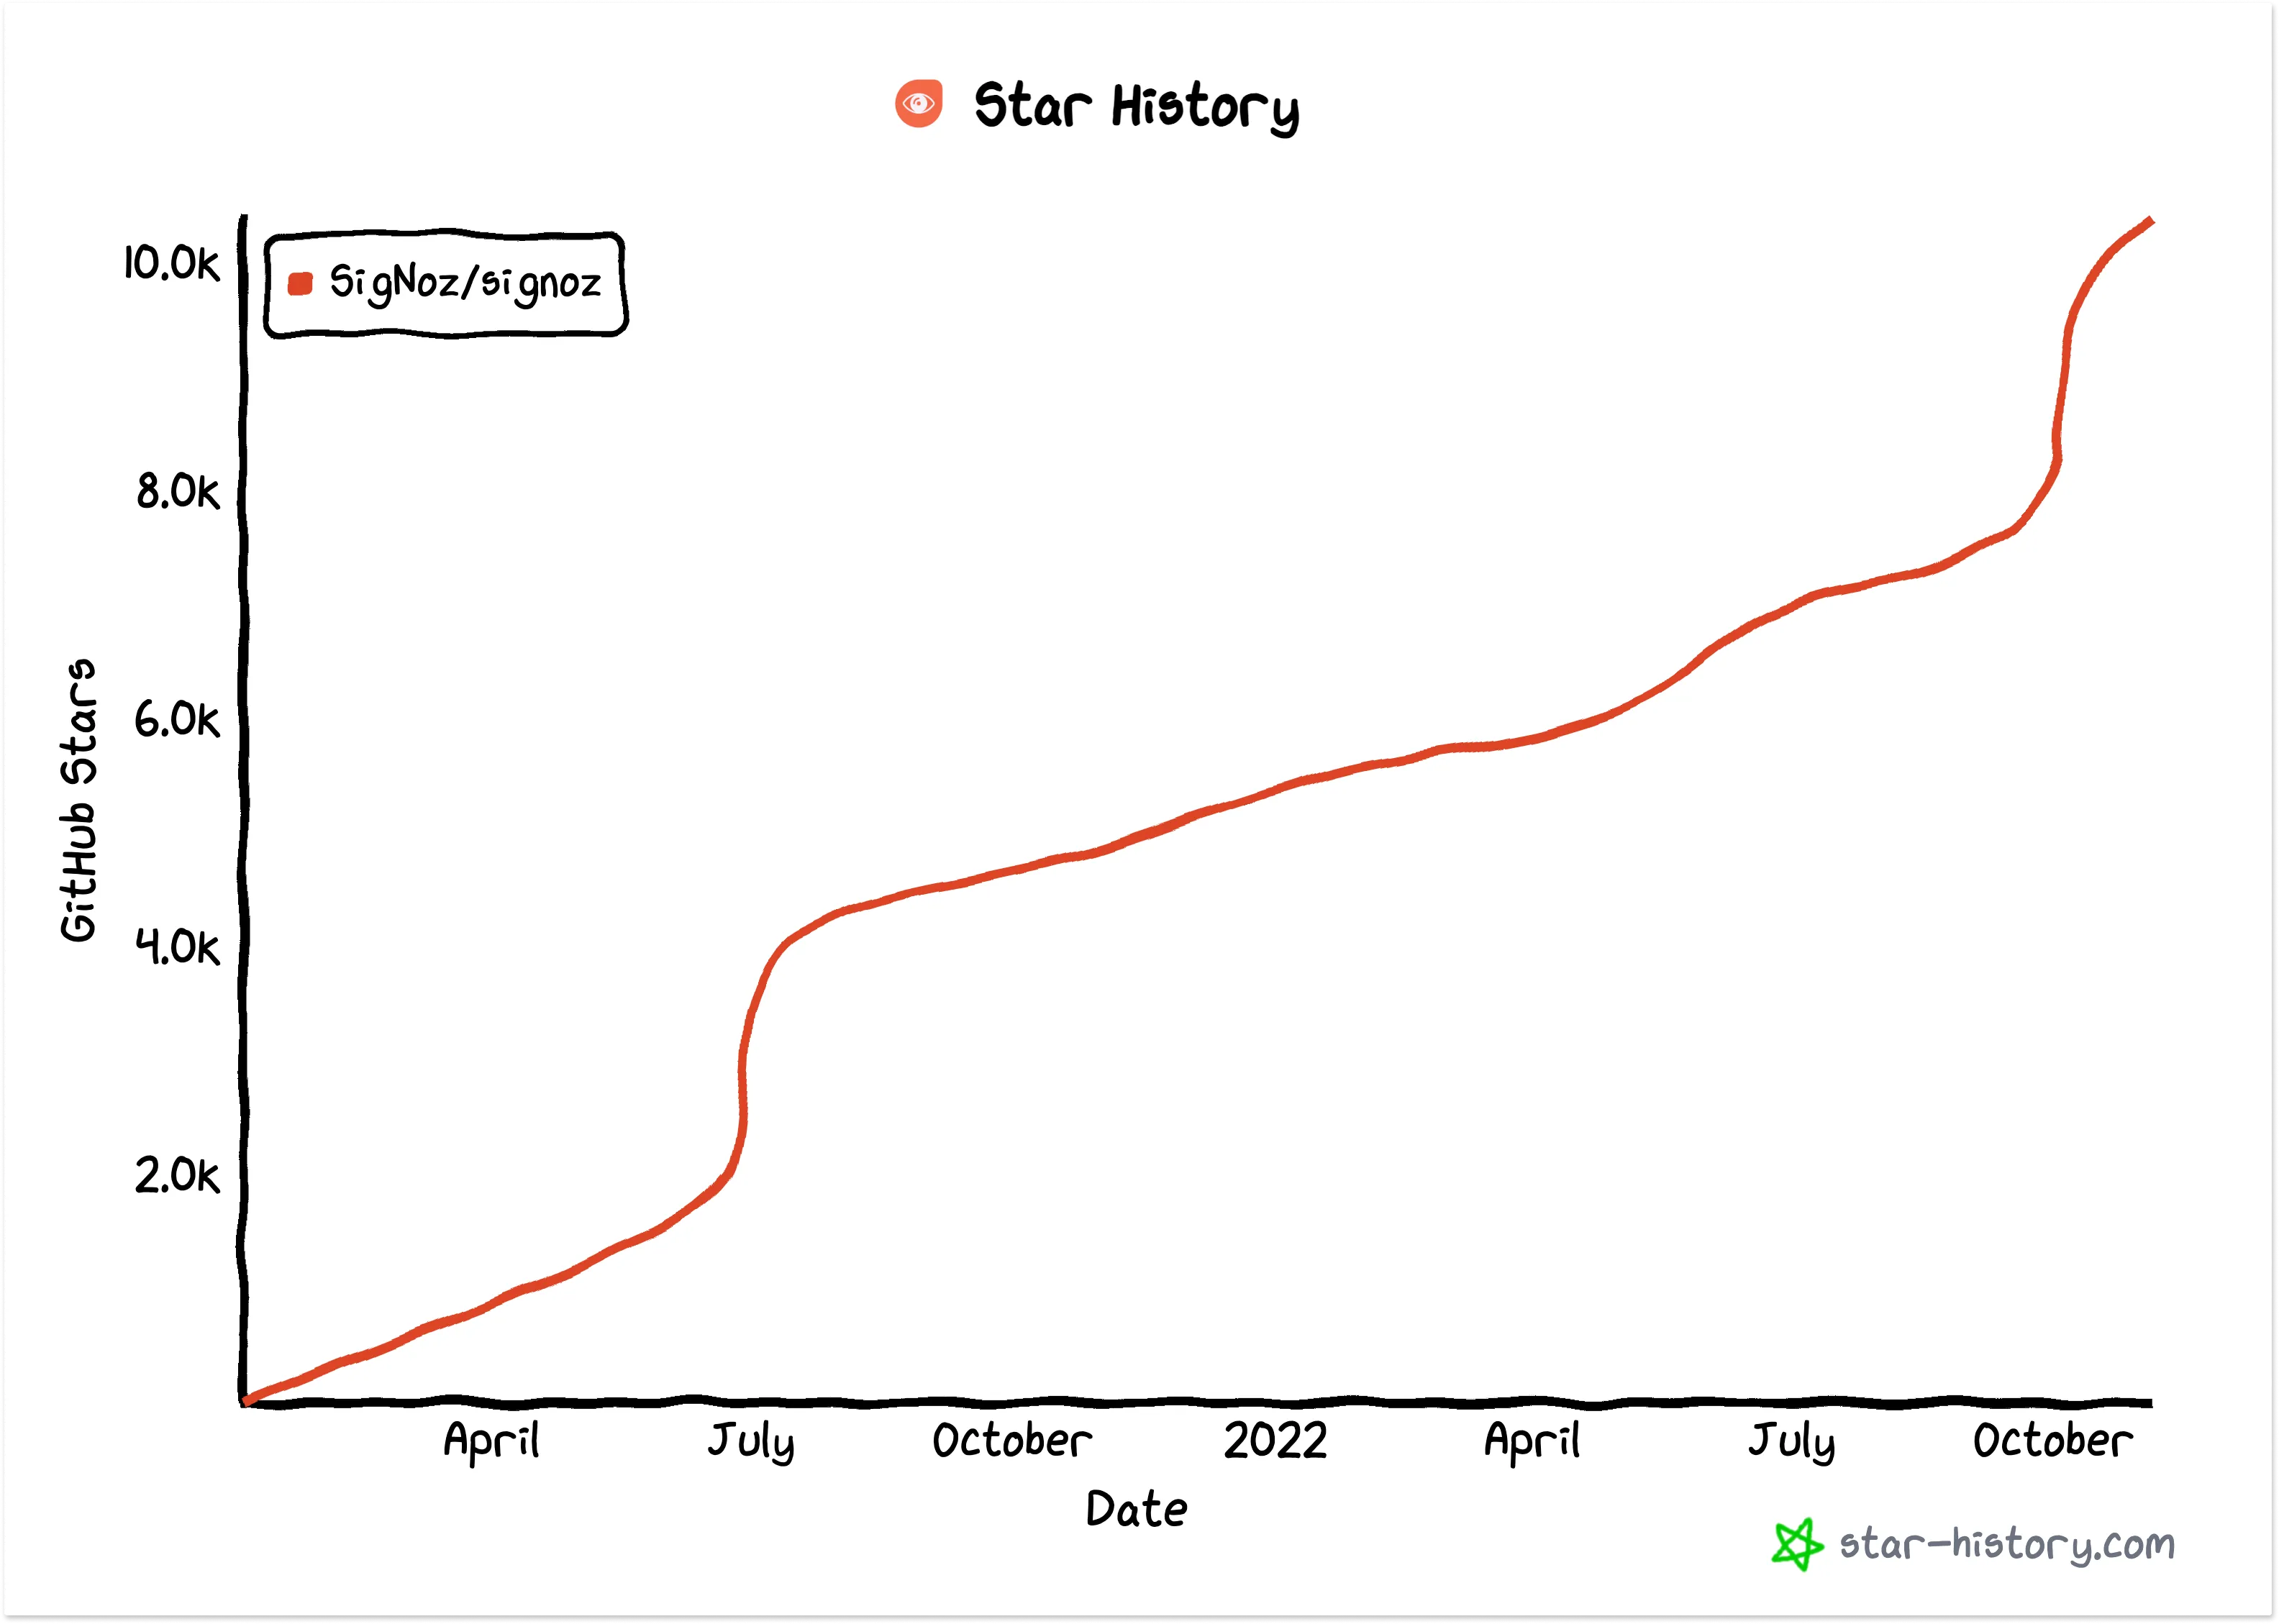 SigNoz crossed 10k stars on GitHub